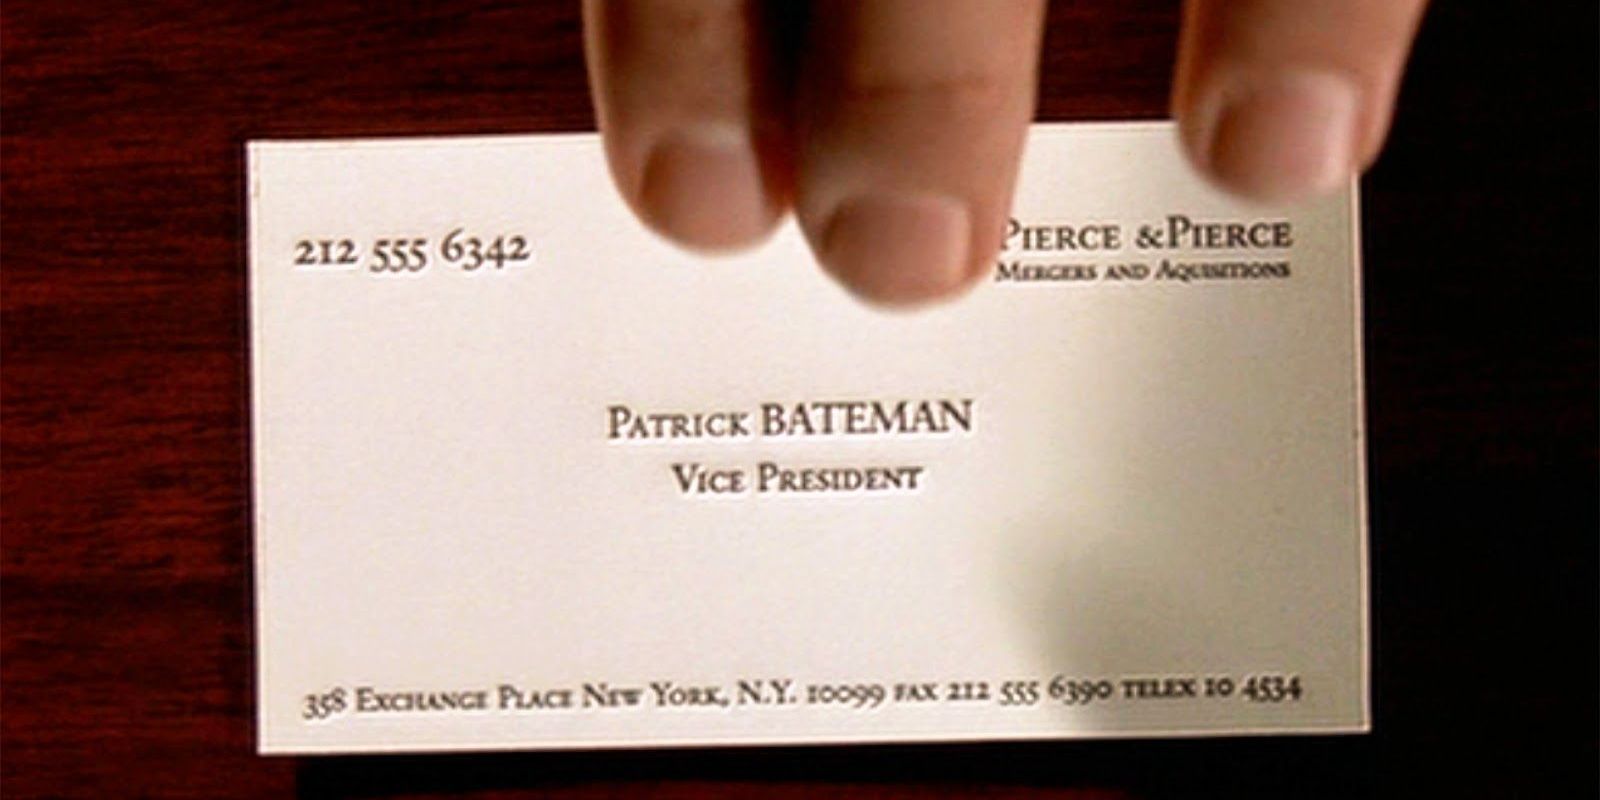 Patrick Bateman's business card in American Psycho.